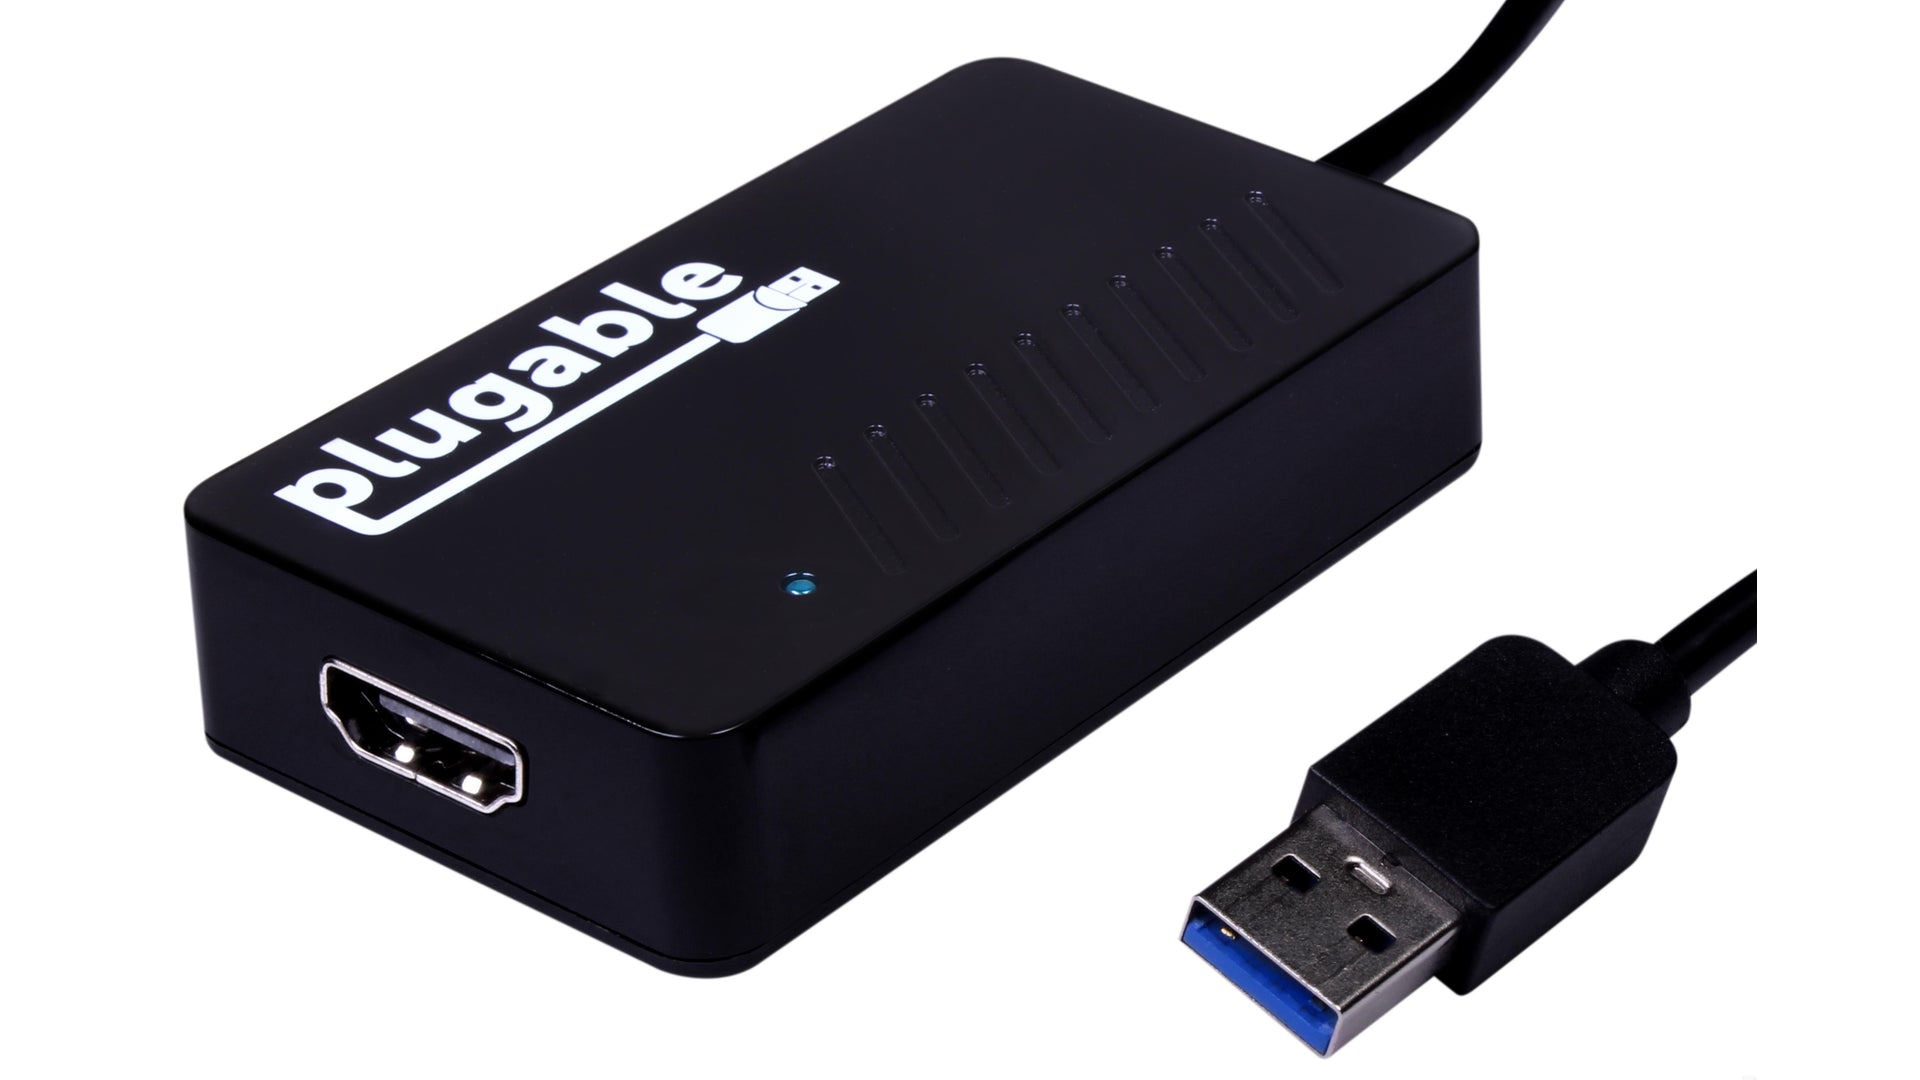 Plugable USB 2.0 Sharing Switch – Plugable Technologies